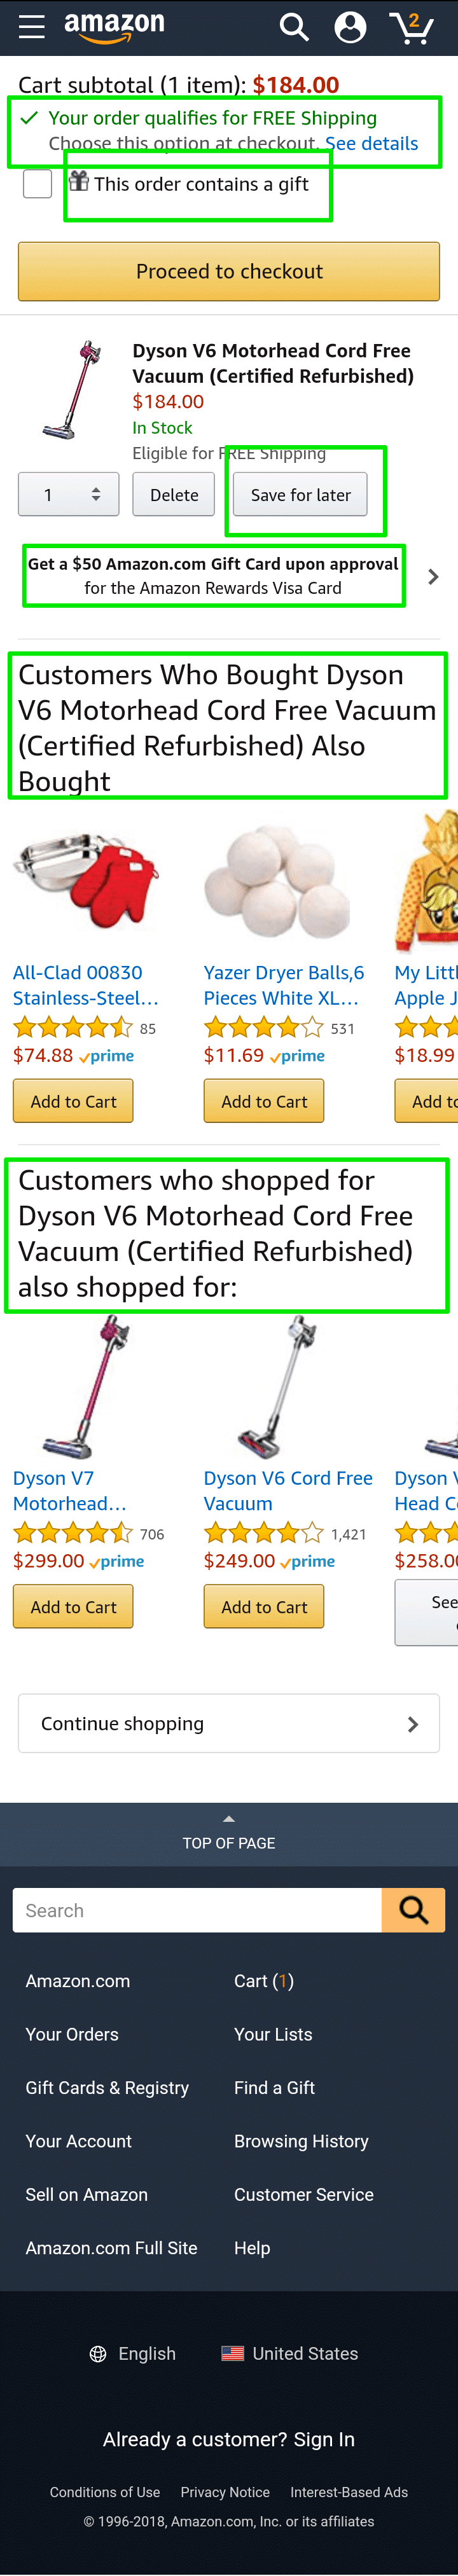 Amazon online store cart